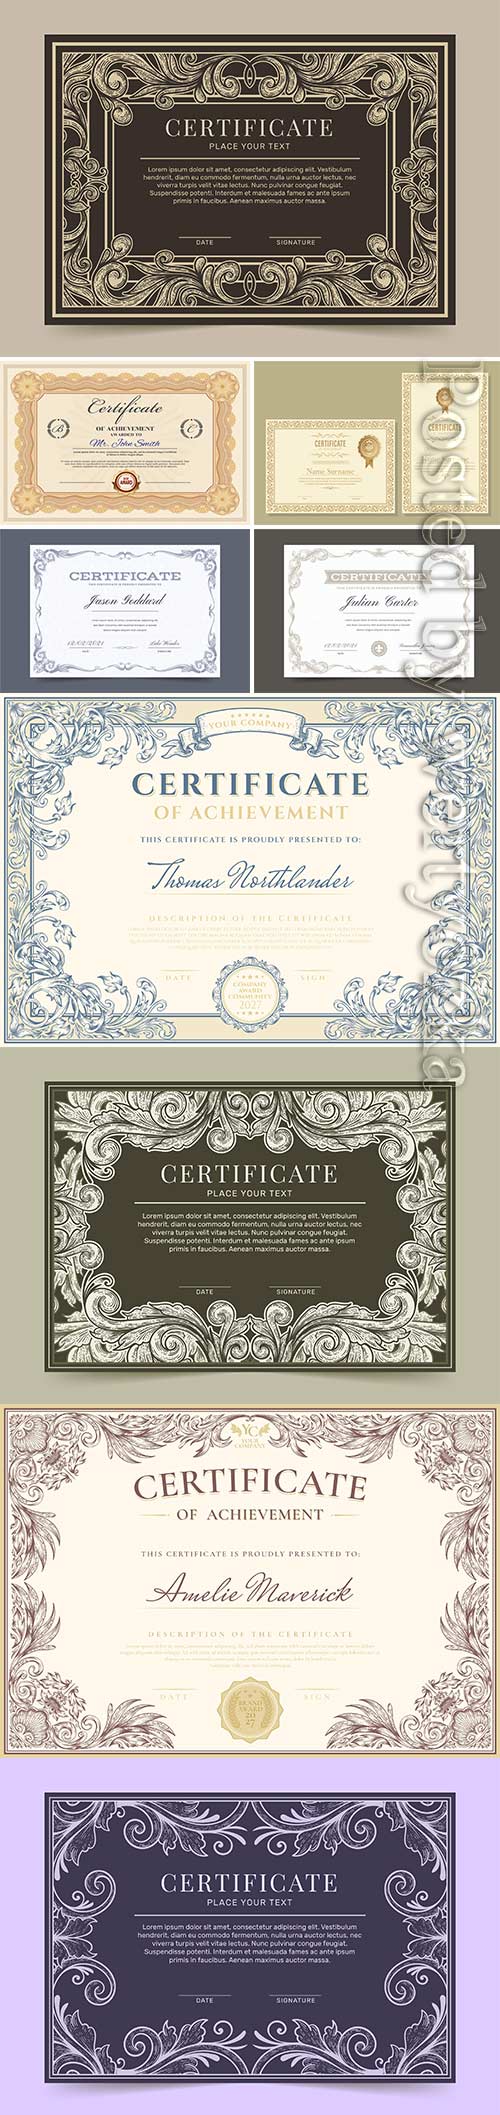 Engraving hand drawn ornamental certificate template